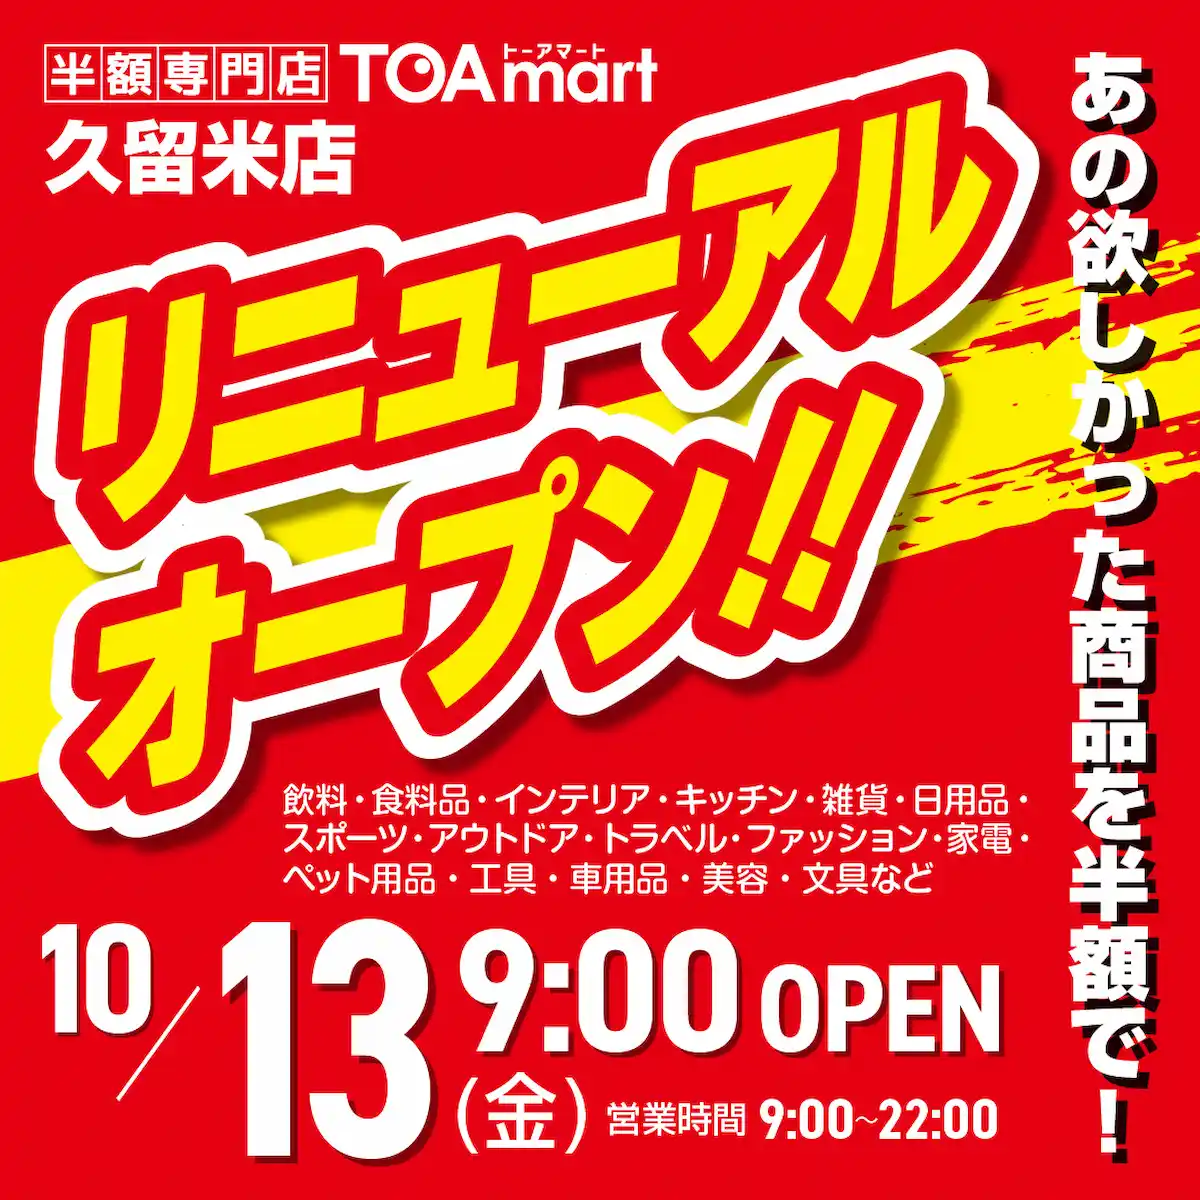 TOAmart（トーアマート）久留米店が10月13日にリニューアルオープンするみたい。オープニングセール＆楽しいイベント盛りだくさん！